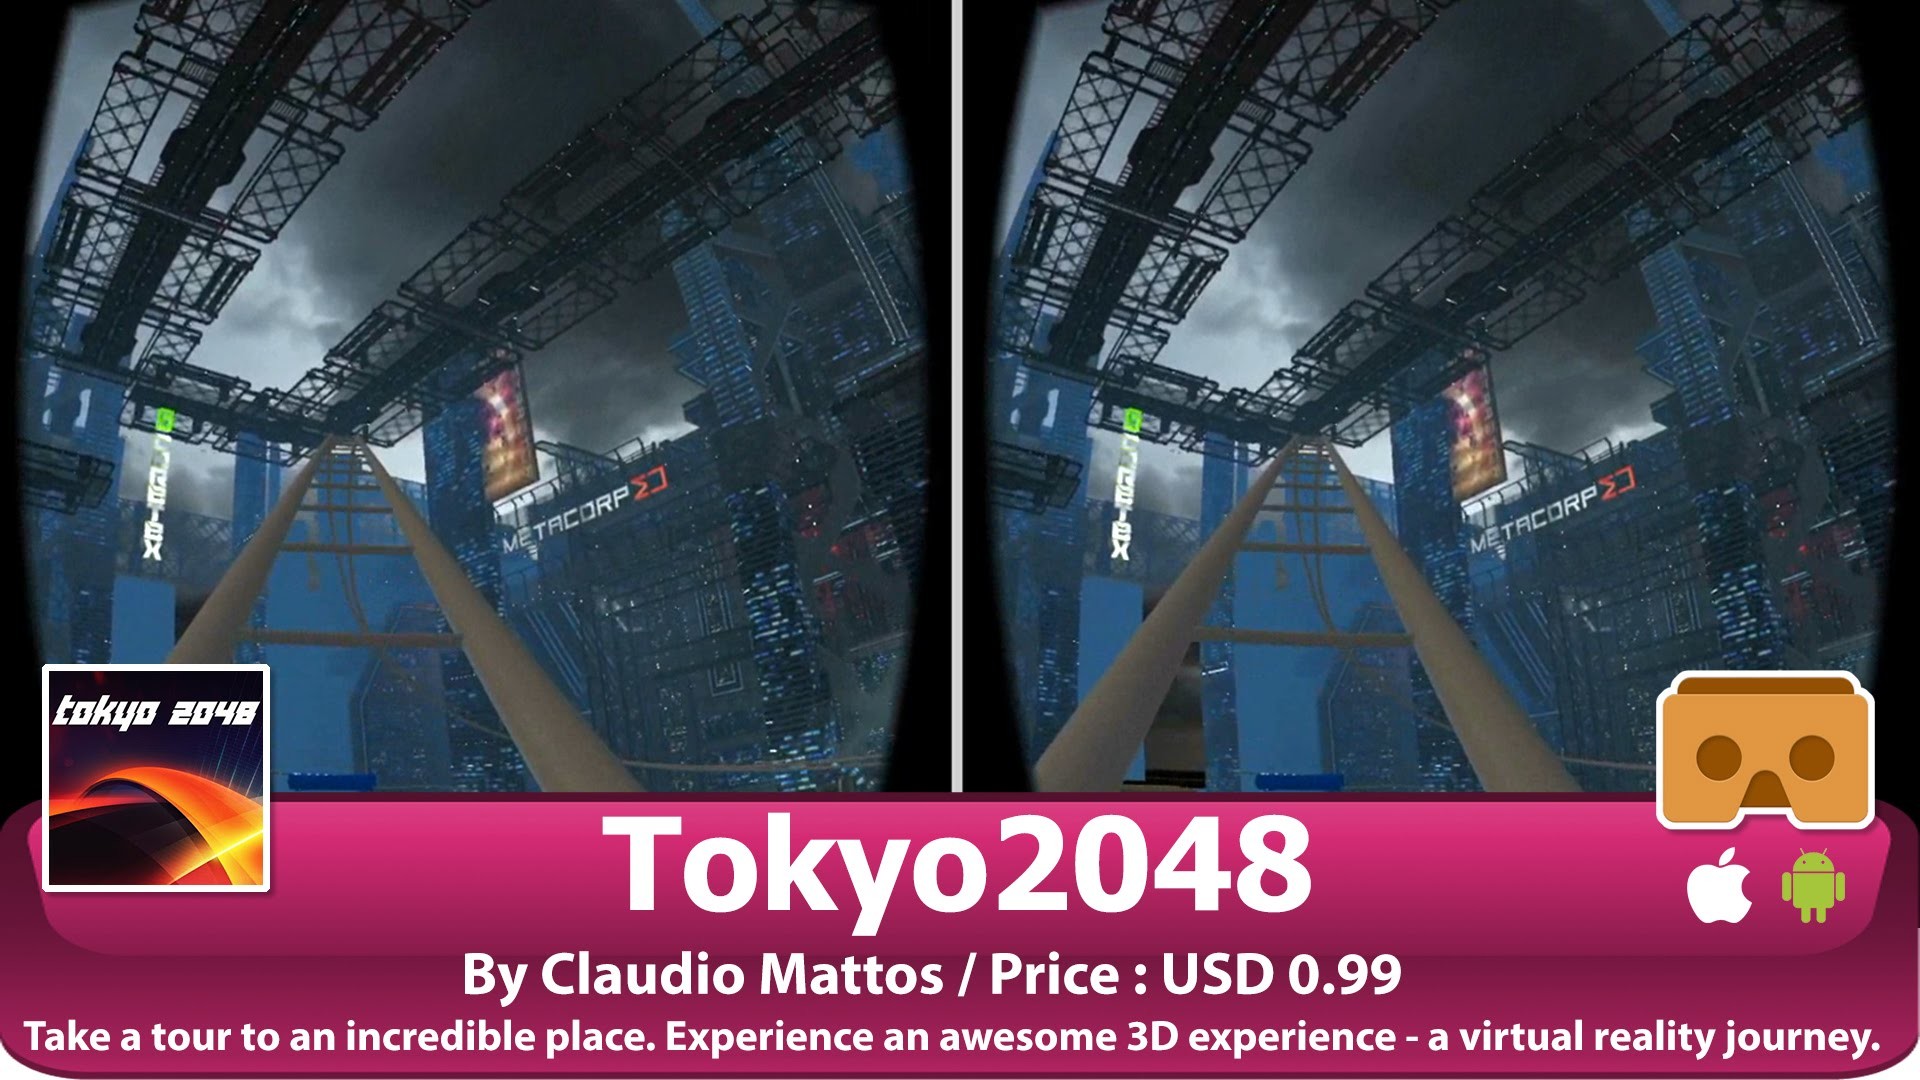 1920x1080 Tokyo 2048 Roller Coaster - VR 3D SBS Roller Coaster in neo Tokyo for  Google Cardboard